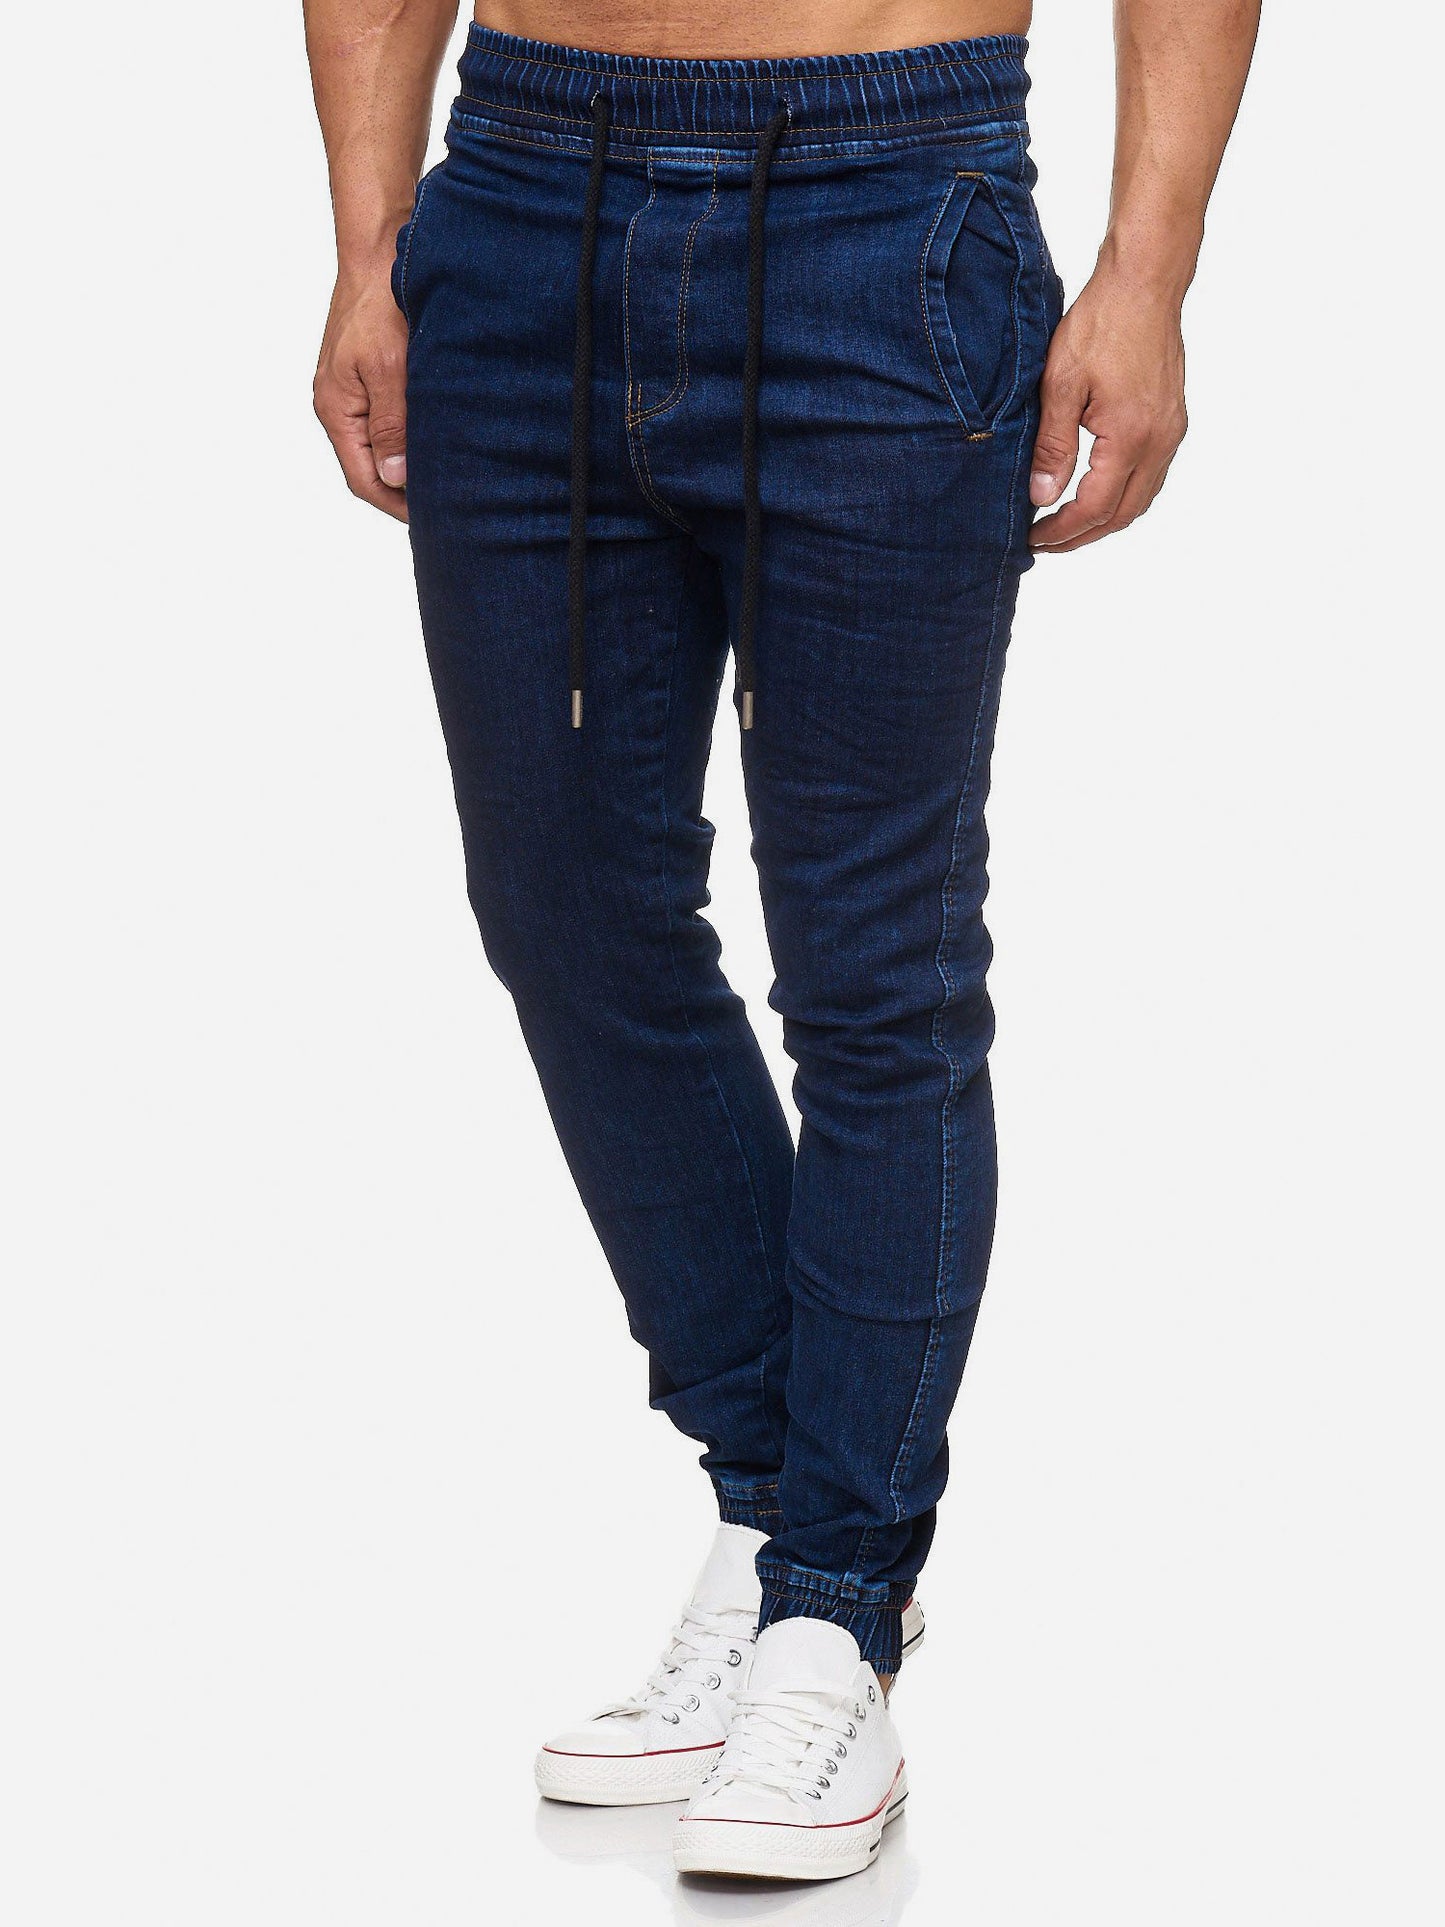 Tazzio Herren Jeans Regular Fit im Jogger-Stil 17504